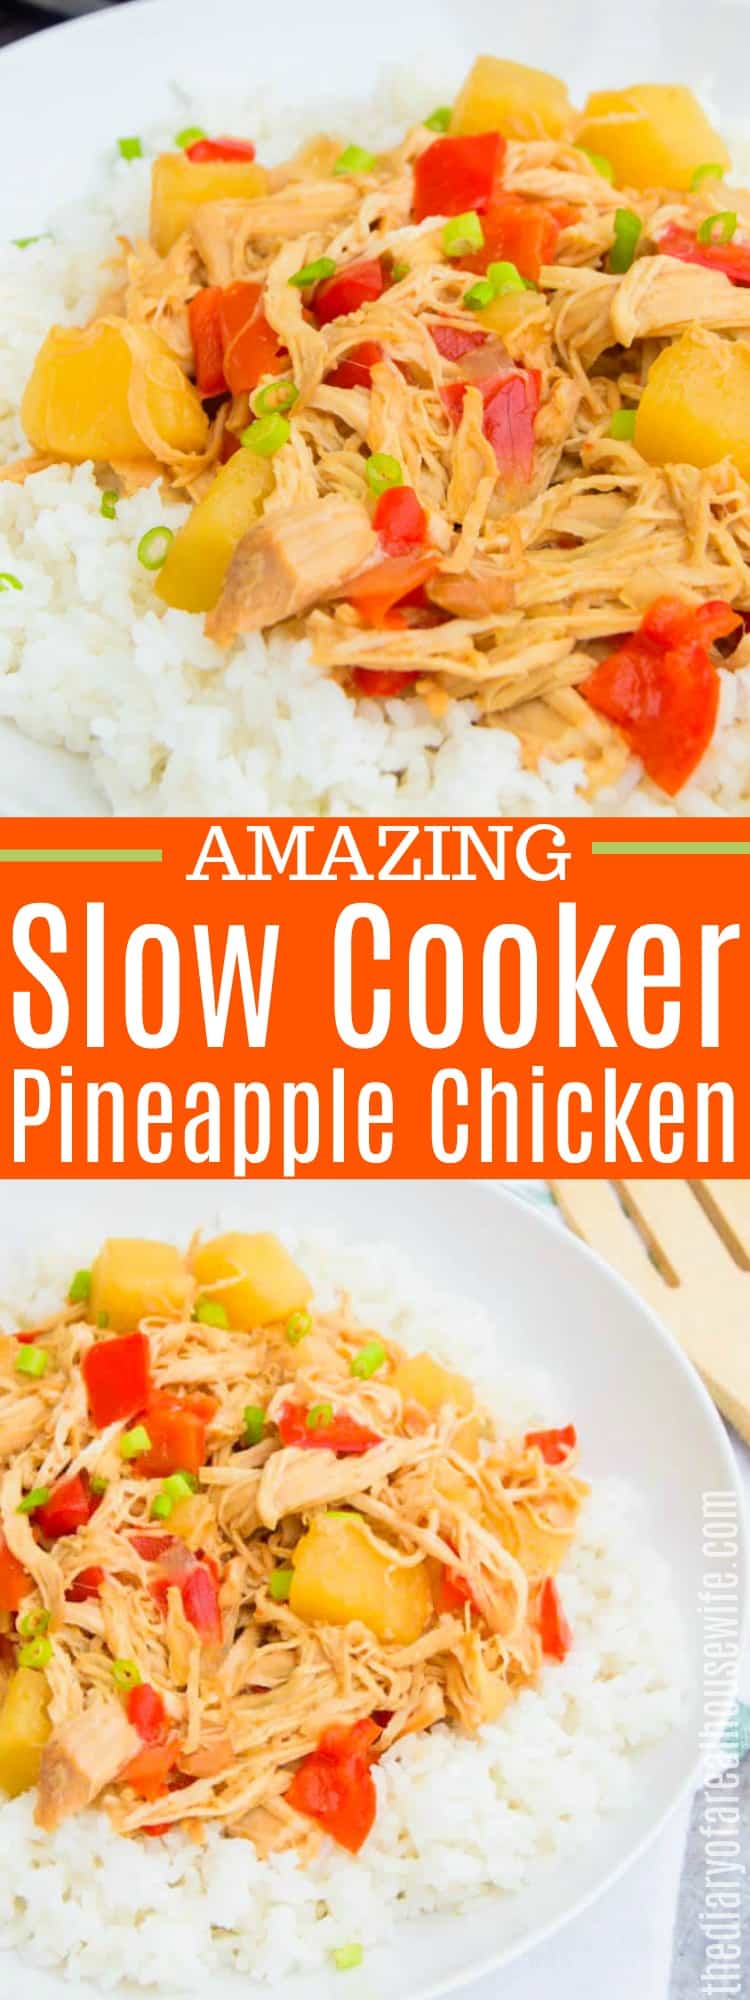 Slow Cooker Pineapple Chicken